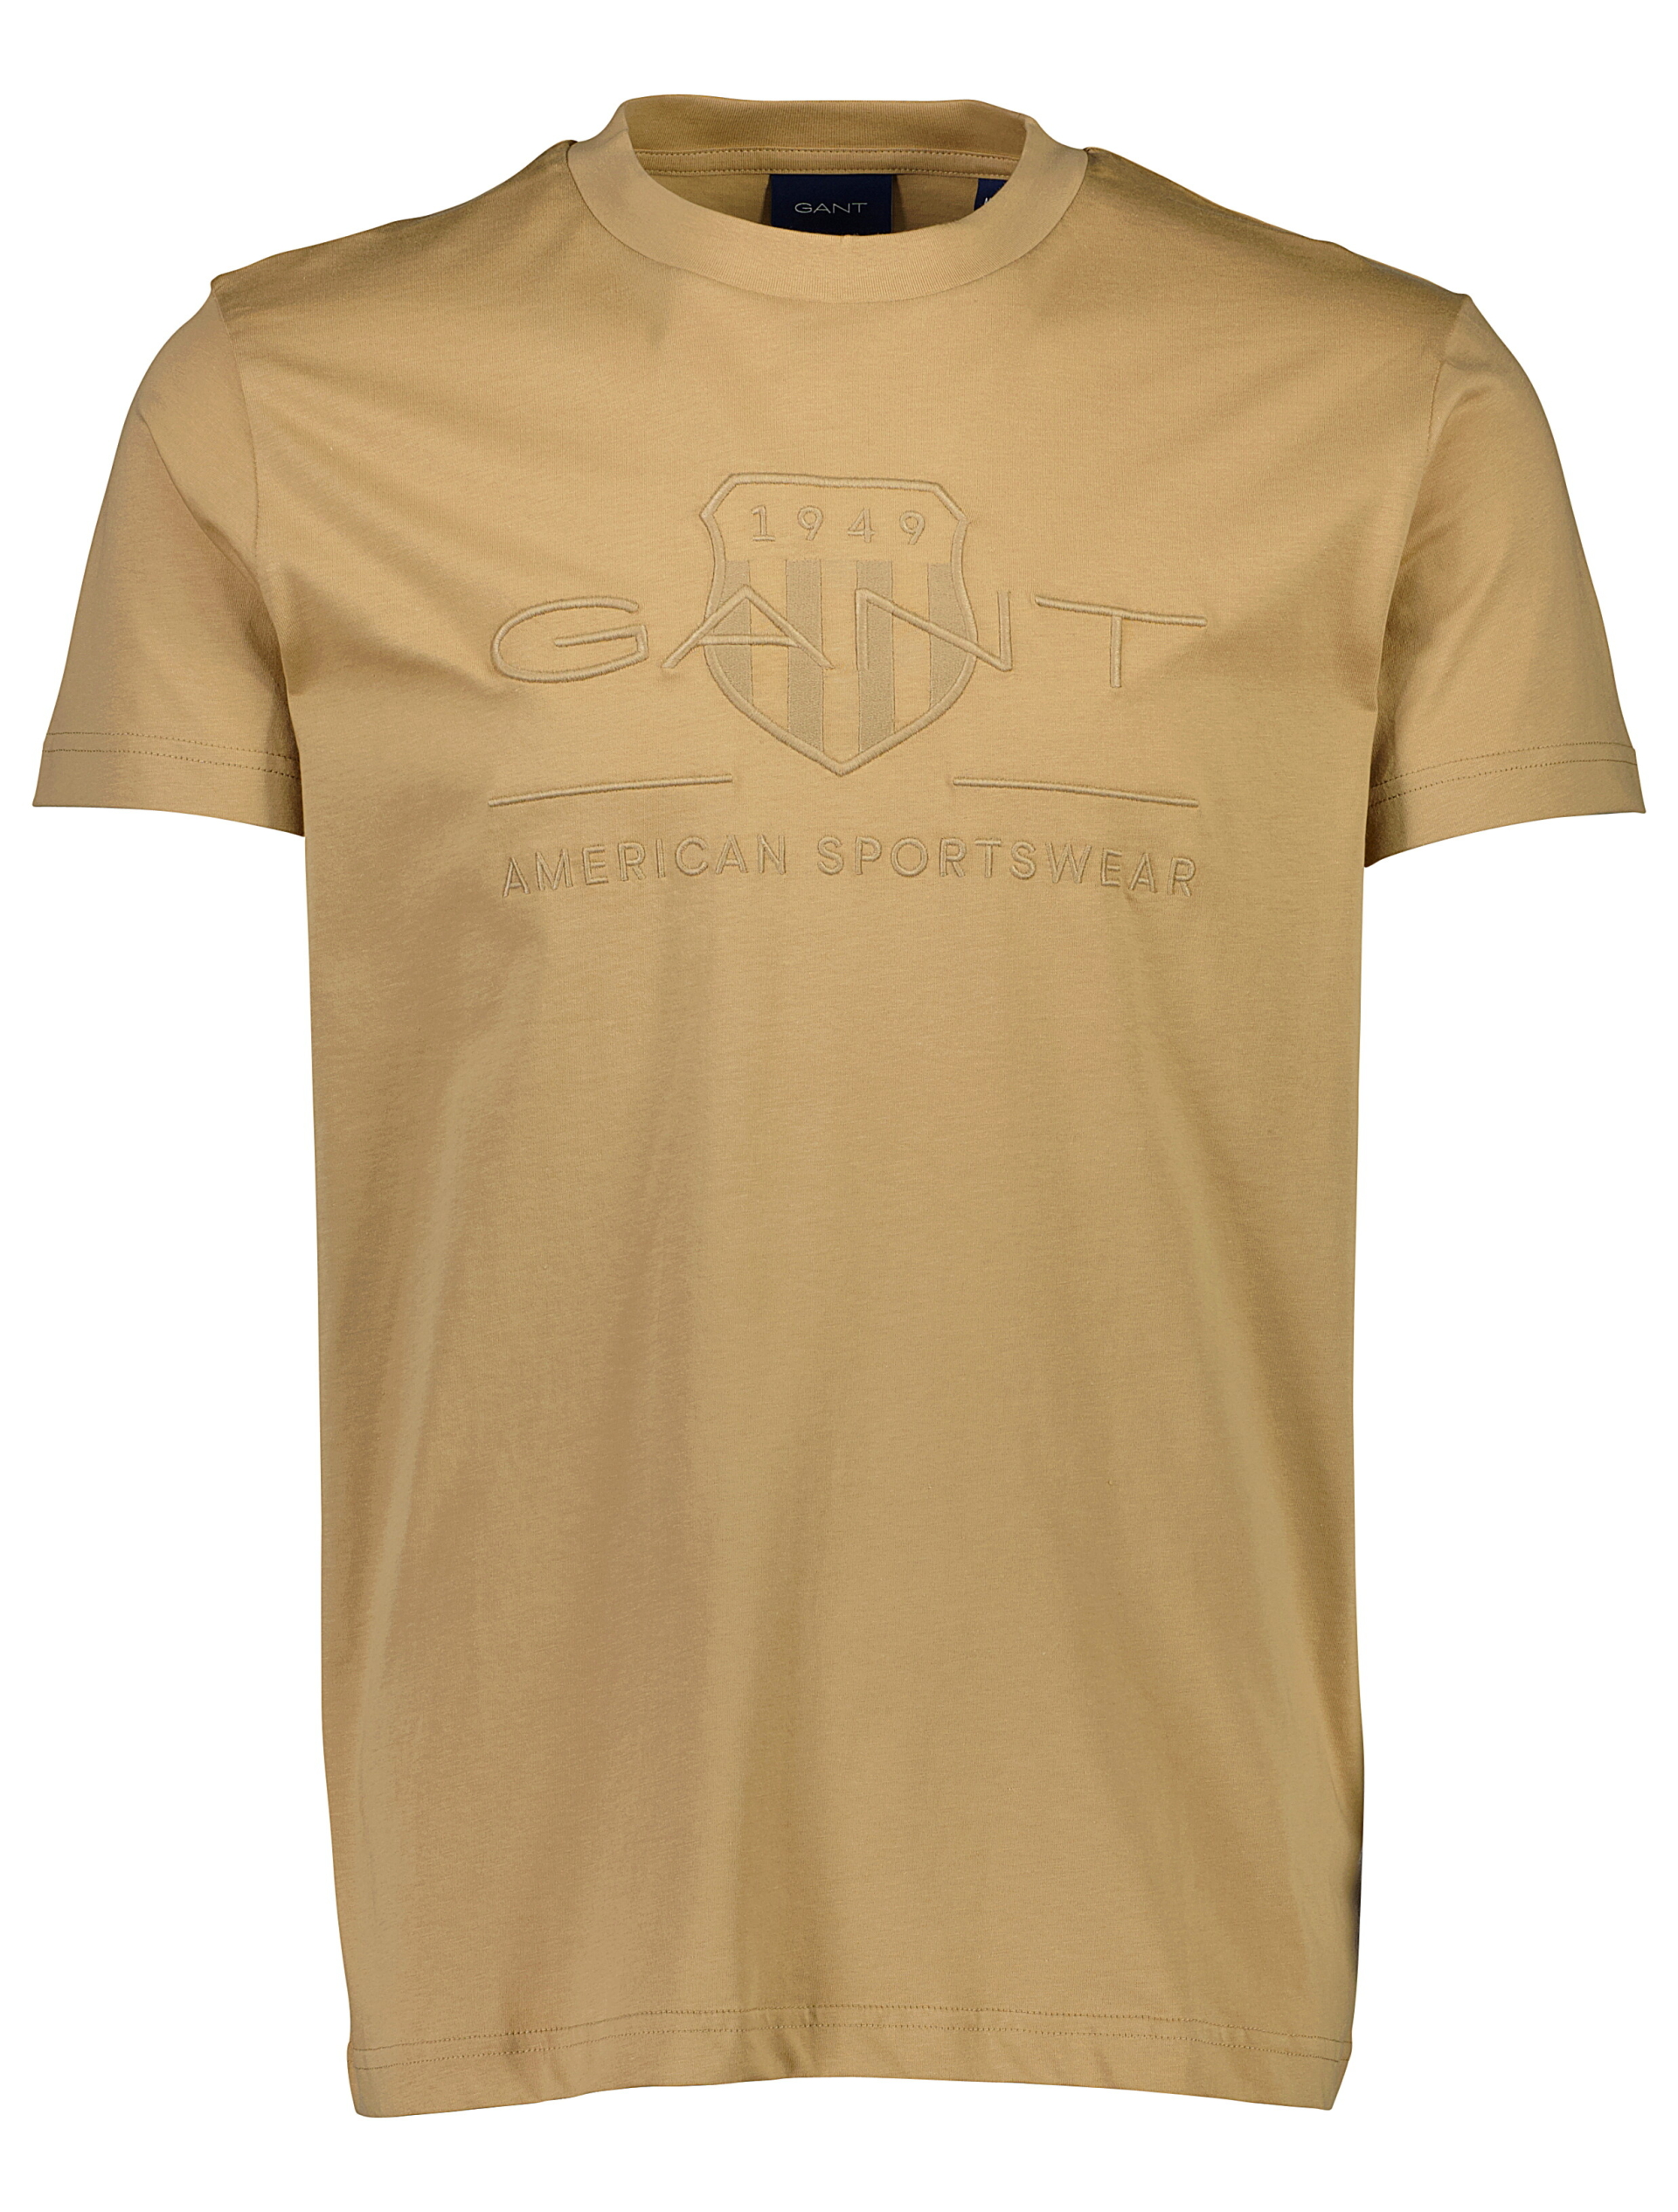 Gant T-shirt sand / 256 hazelwood beige